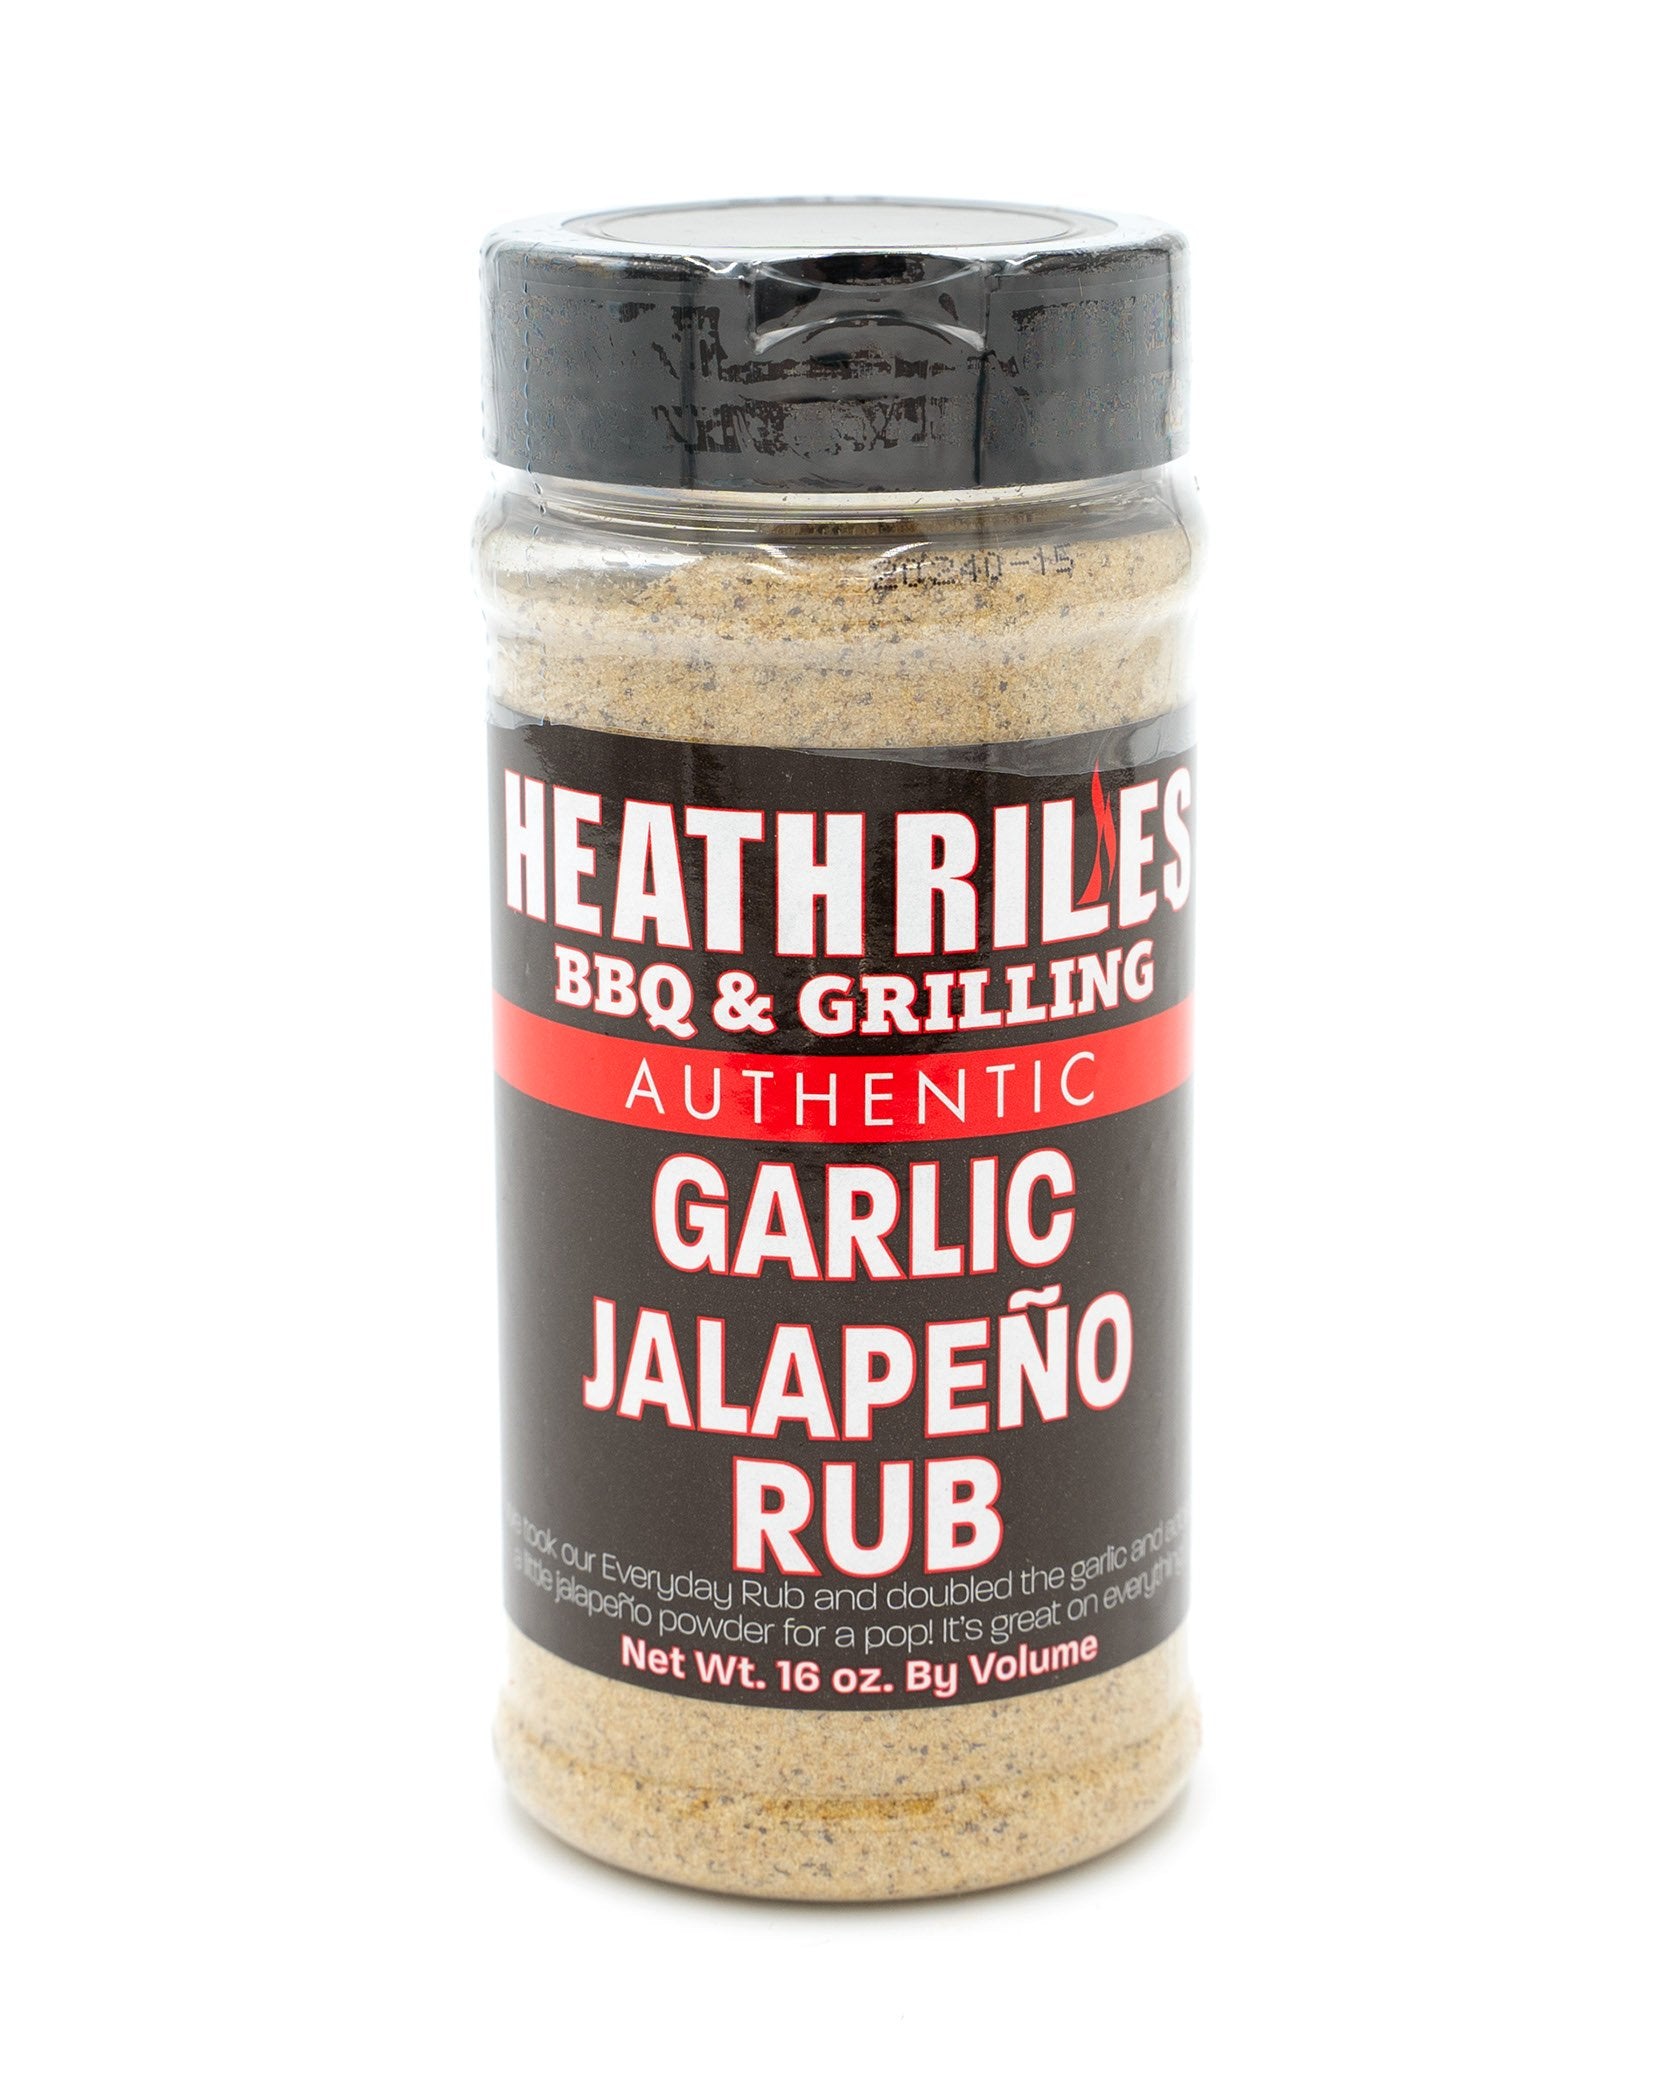 Heath Riles Garlic Jalapeño Rub is my goto! Yum! #Foodie #eatminnneso